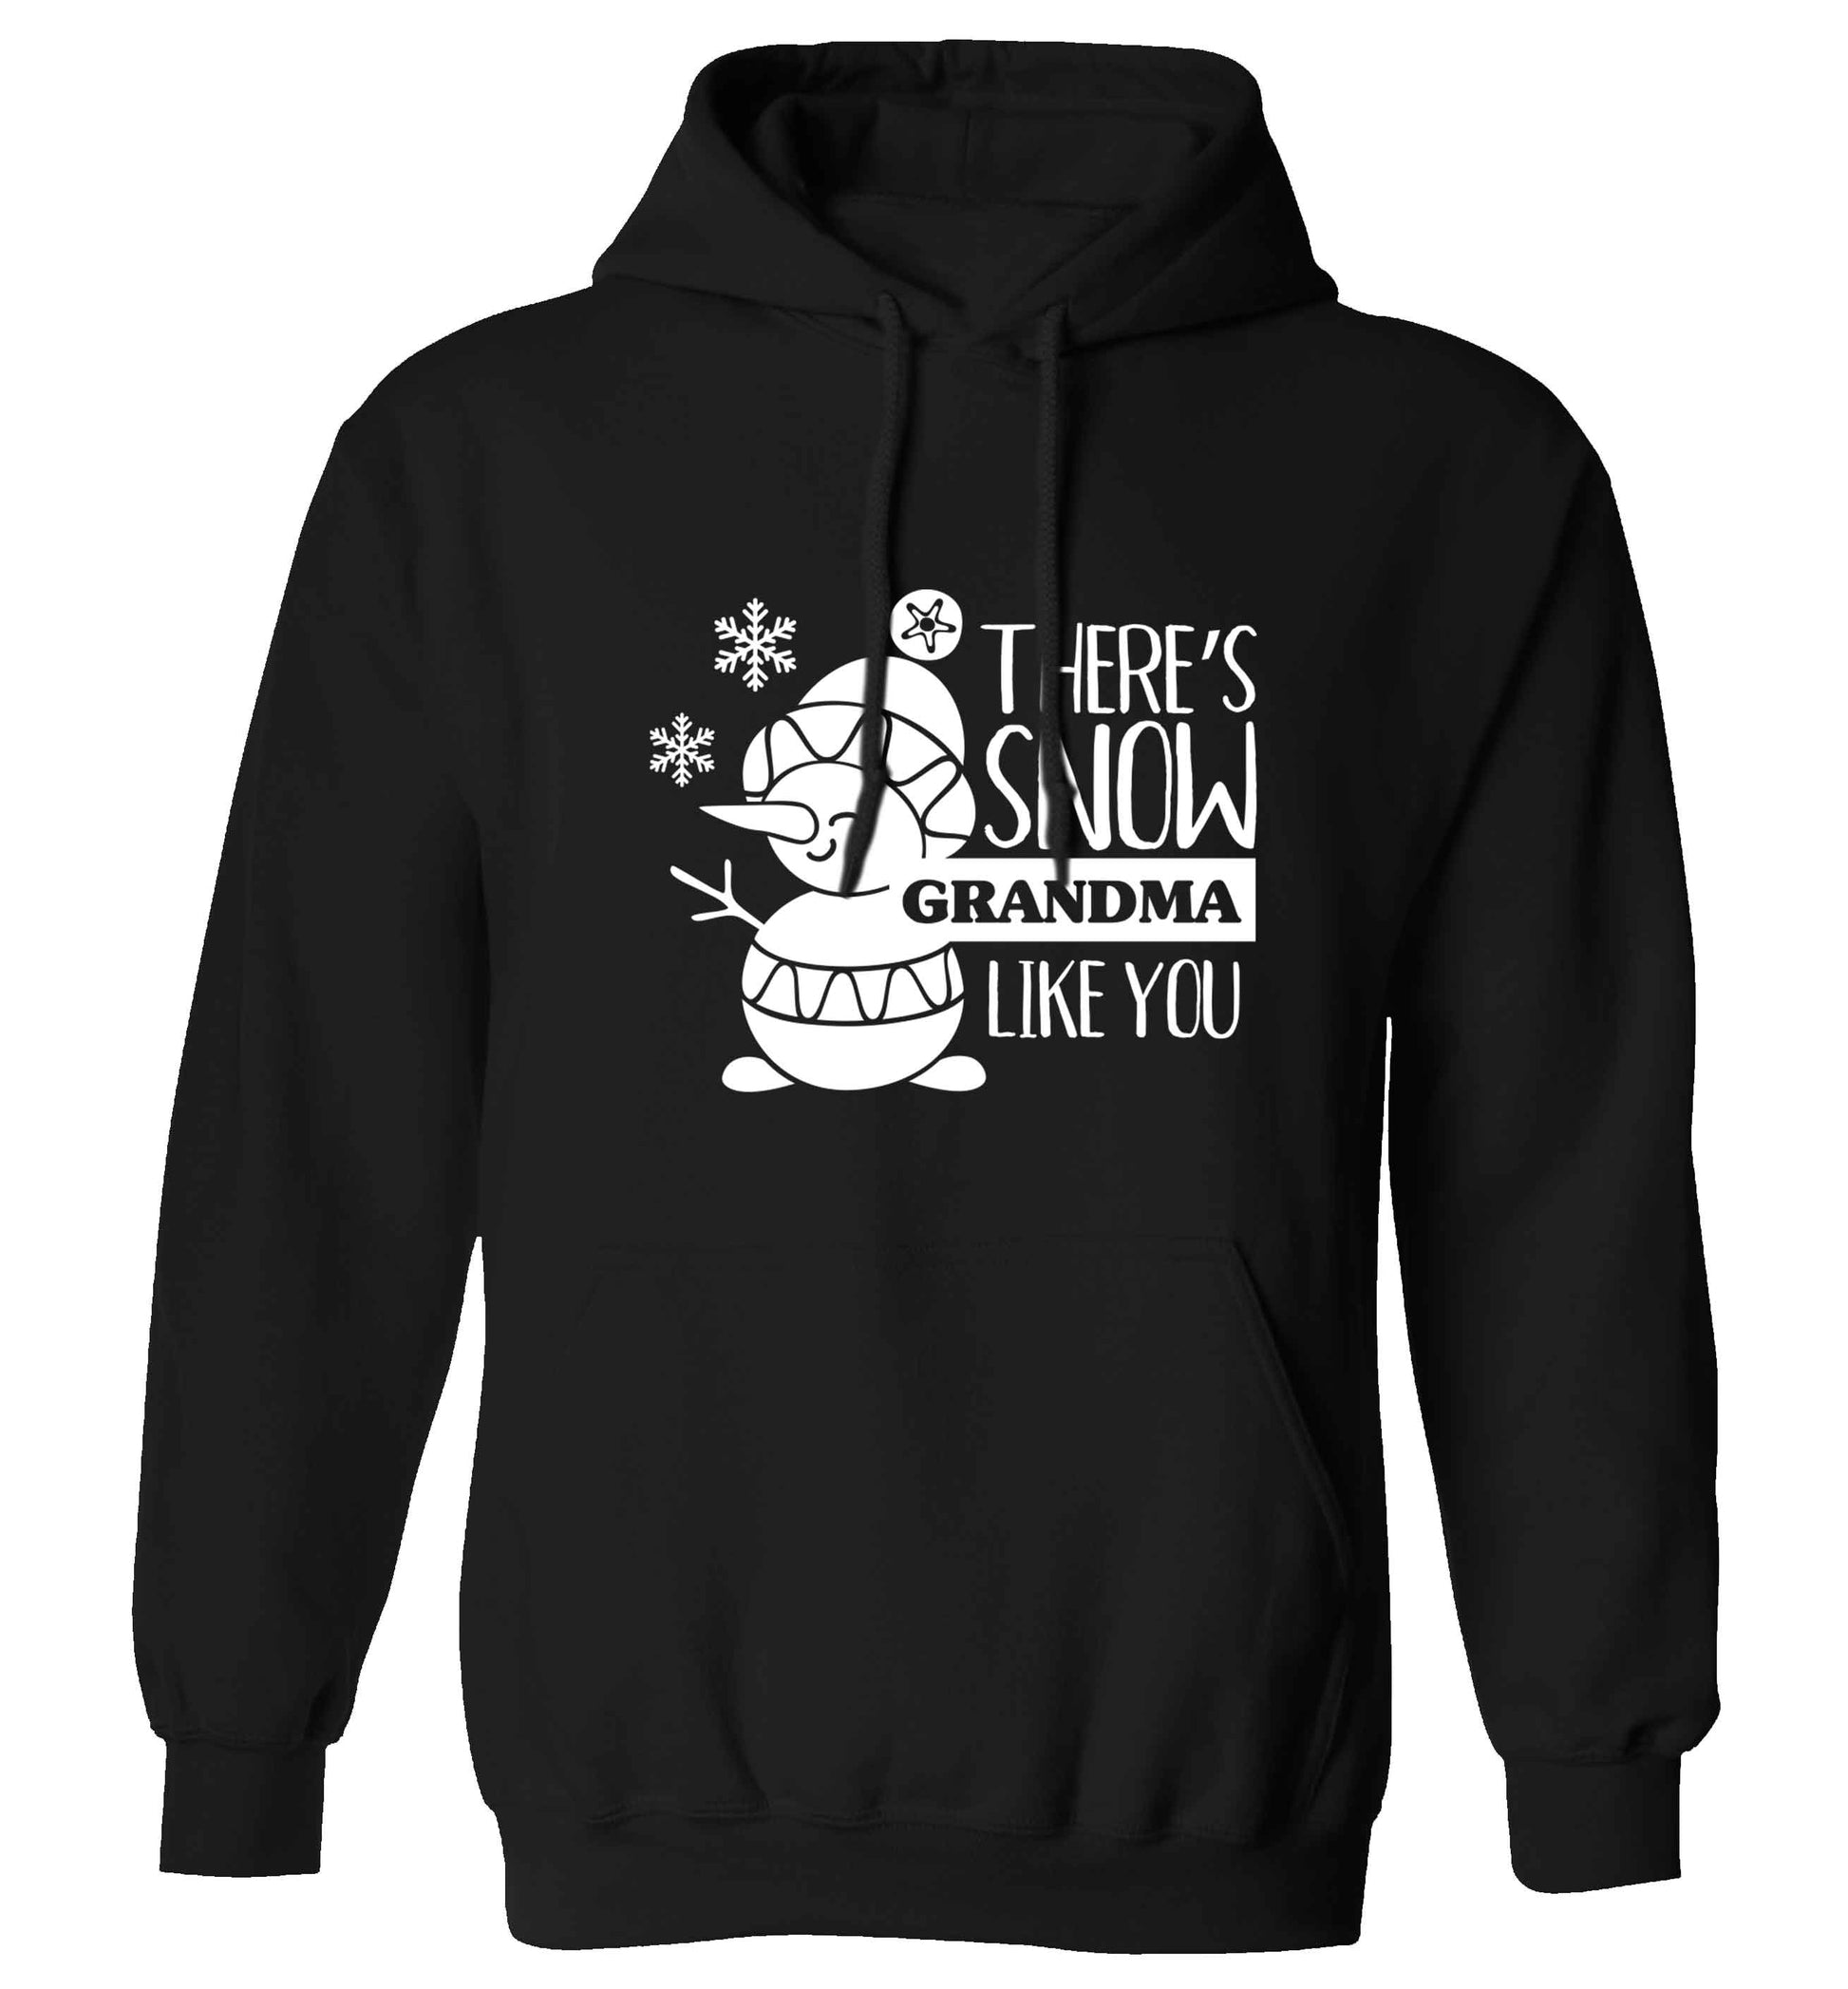 There's snow grandma like you adults unisex black hoodie 2XL